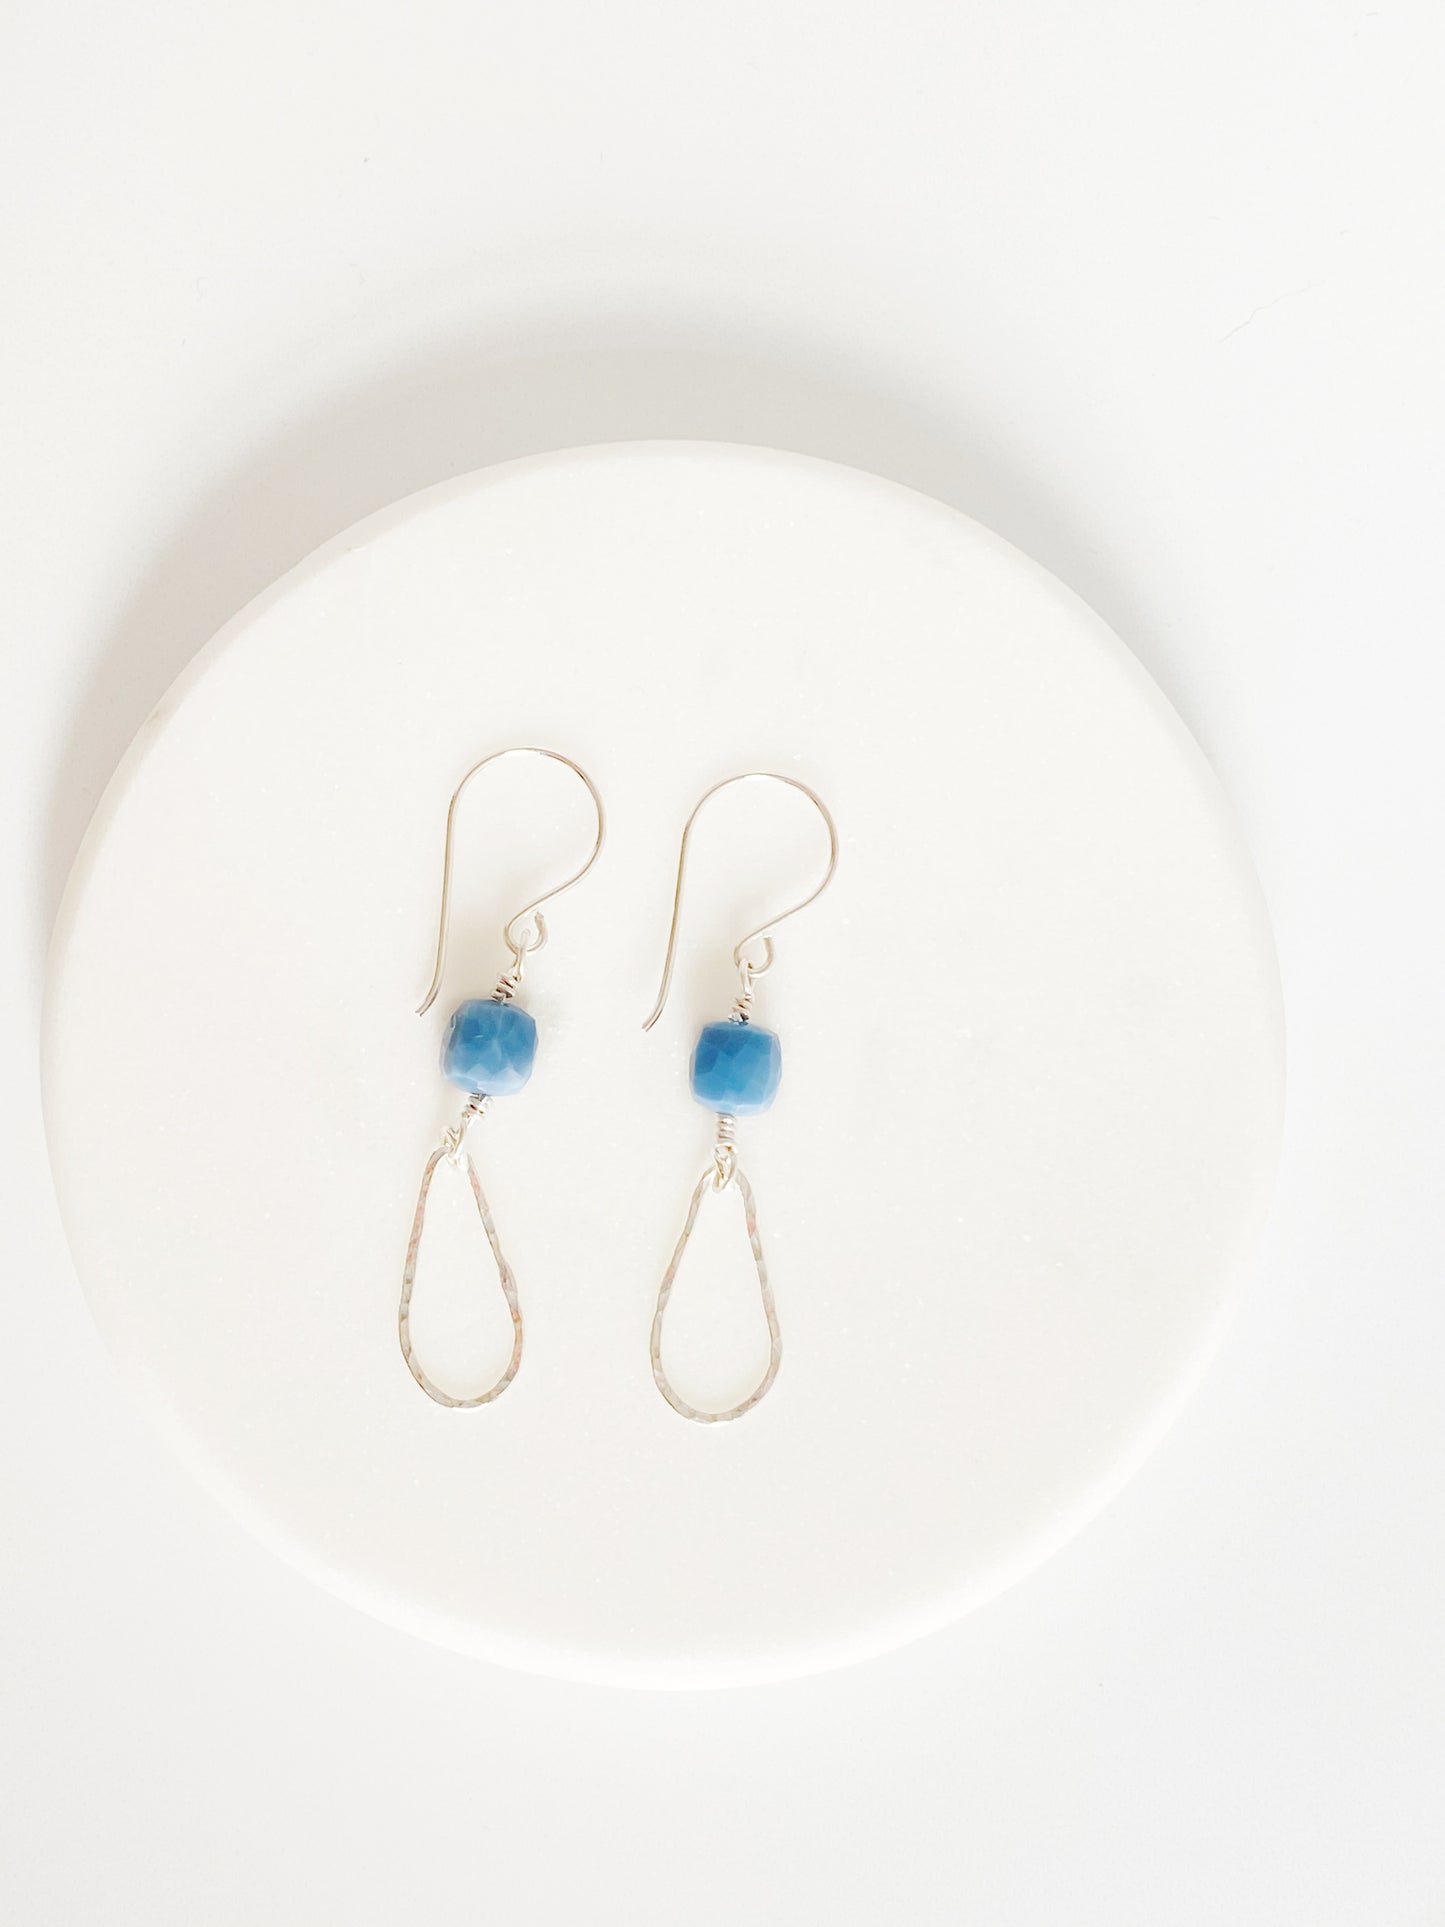 Blue Drops Earrings on white ceramic coaster